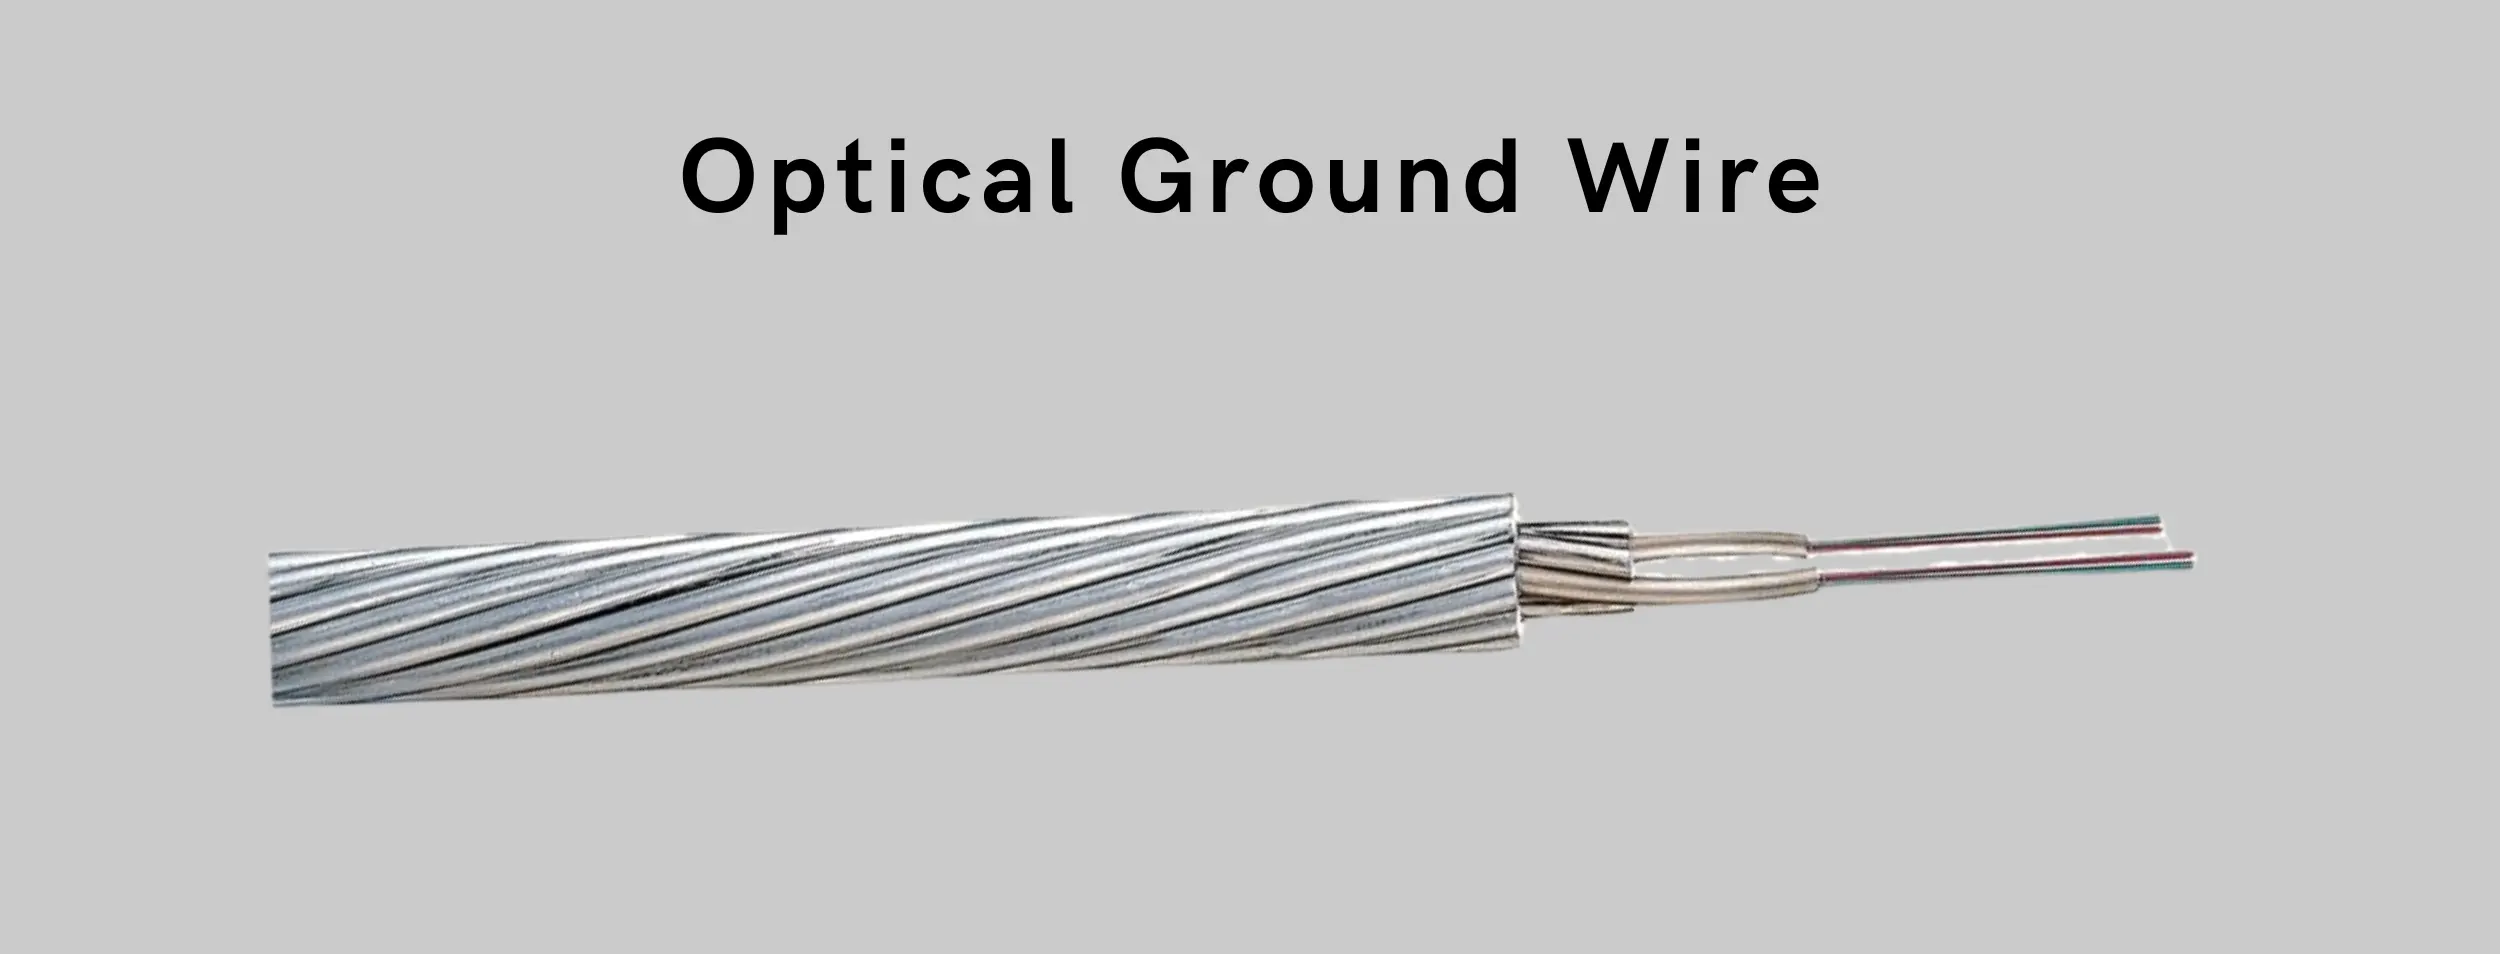 Optical ground wire (OPGW)